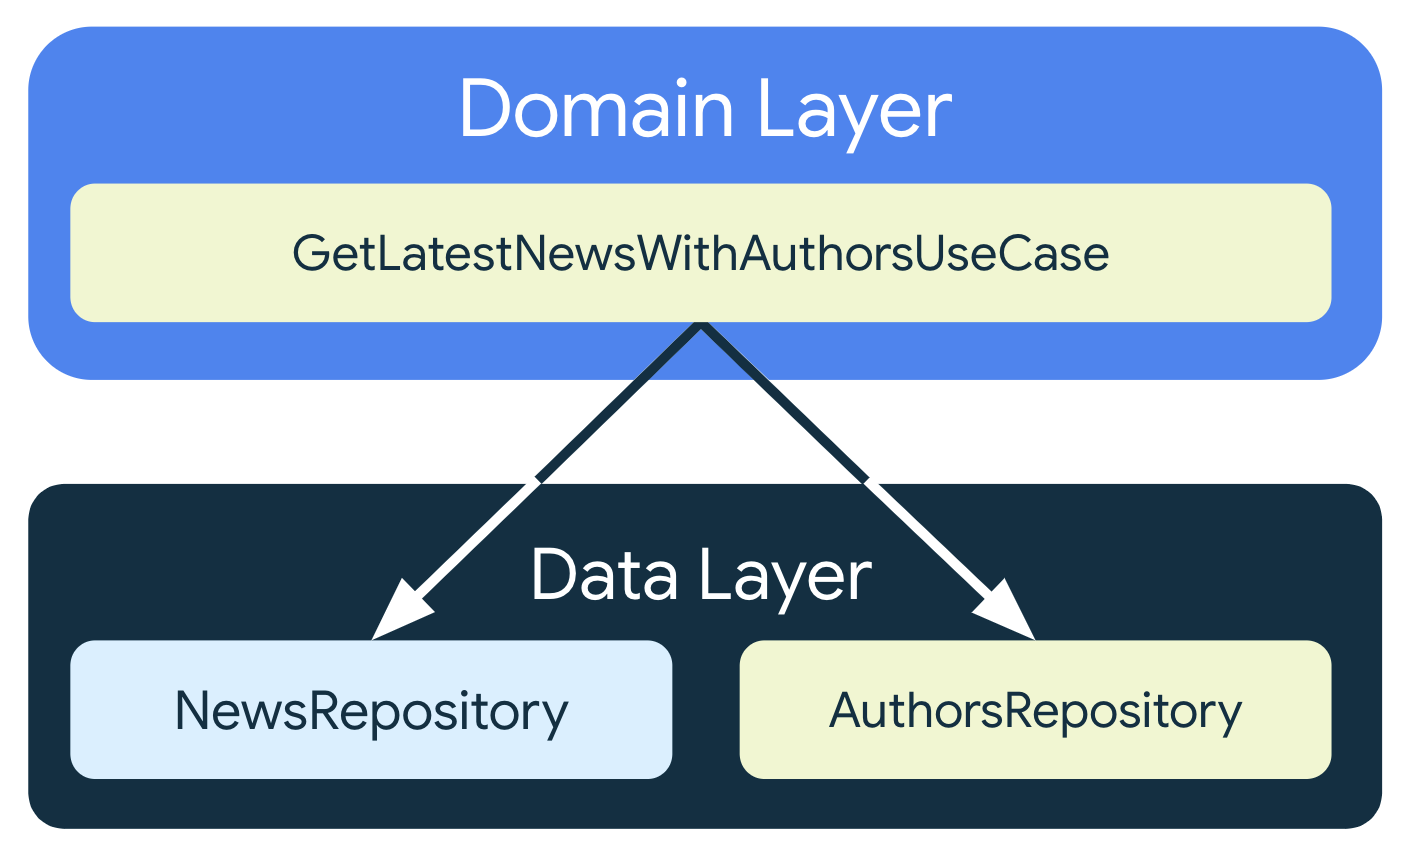 GetLatestNewsWithAuthorsUseCase depende de dos clases de repositorios diferentes de la capa de datos: NewsRepository y AuthorsRepository.